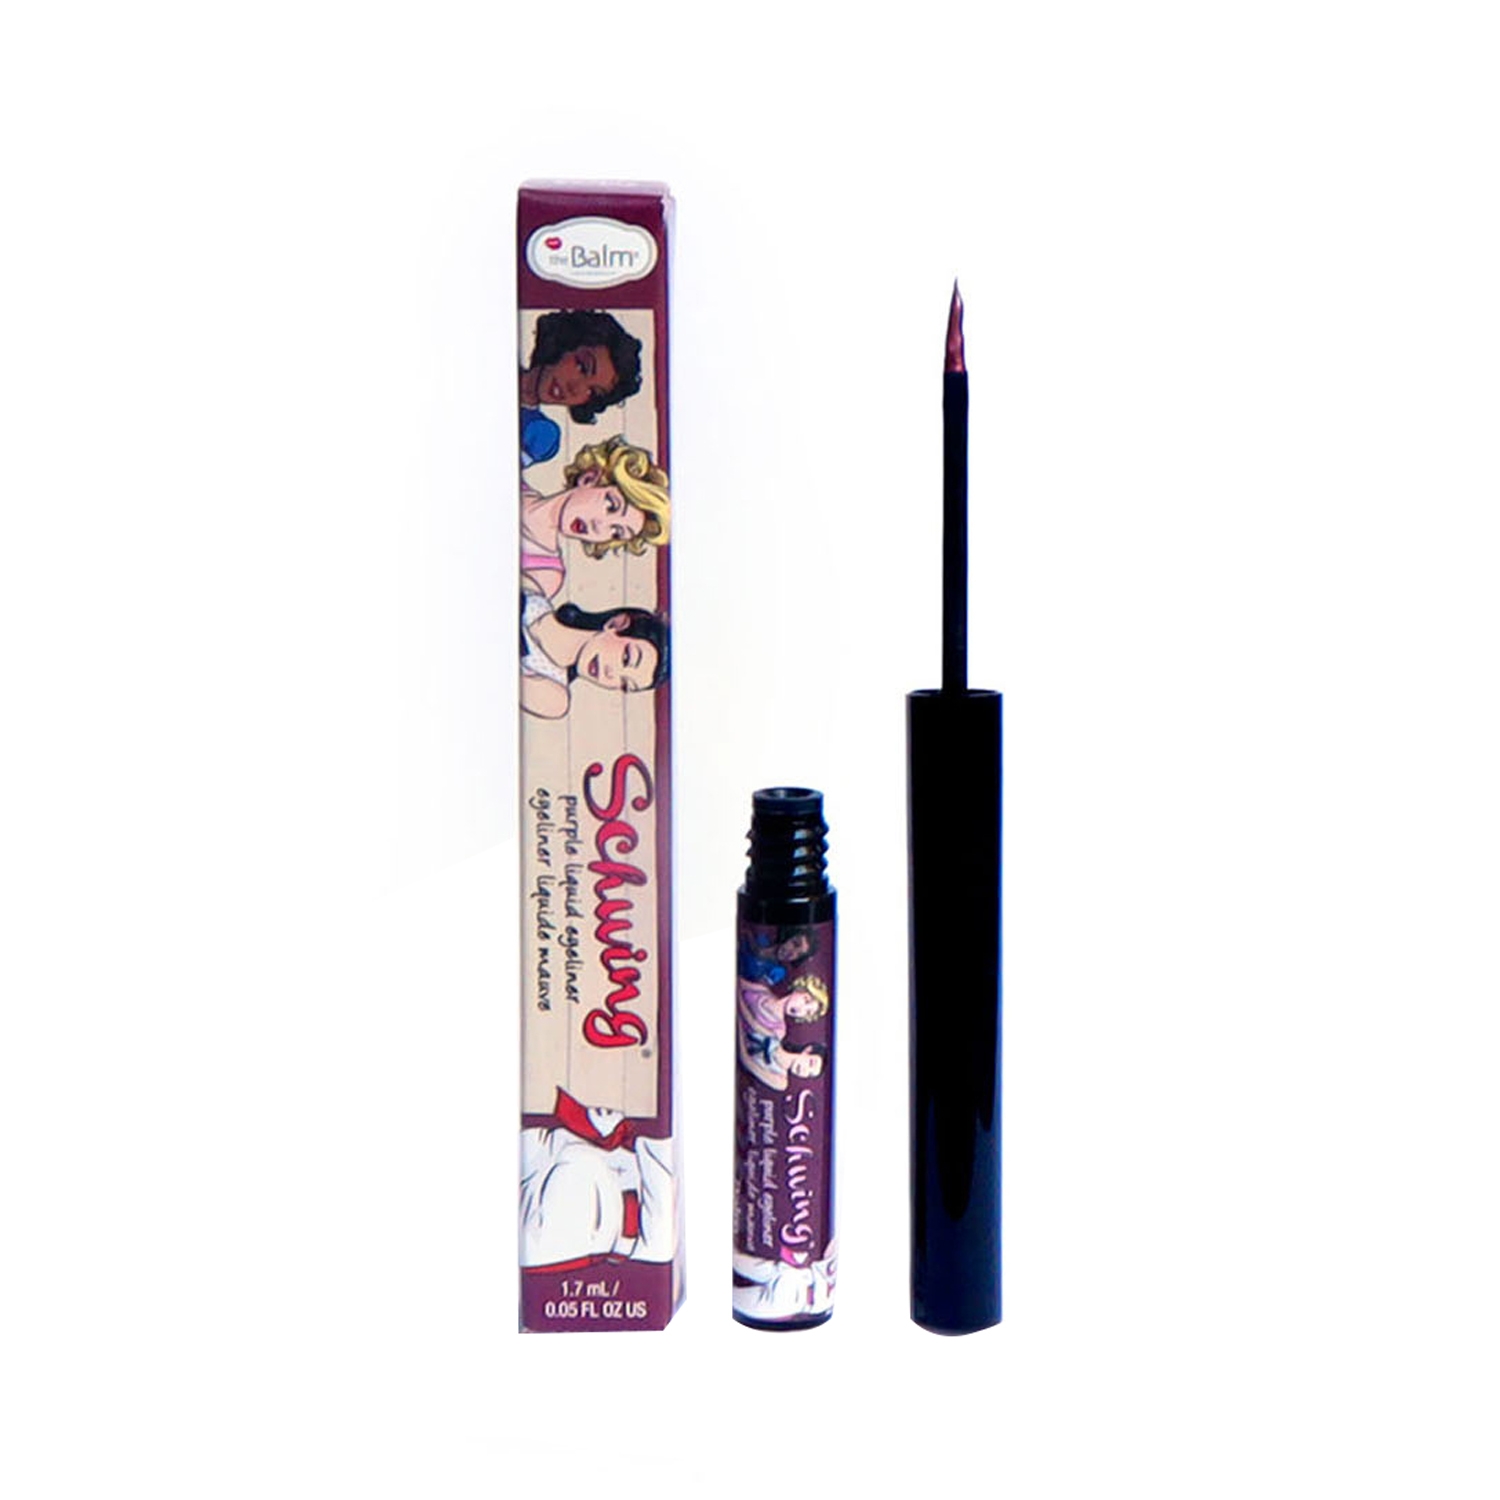 theBalm Cosmetics | theBalm Cosmetics Schwing Liquid Eyeliner - Purple (1.7ml)